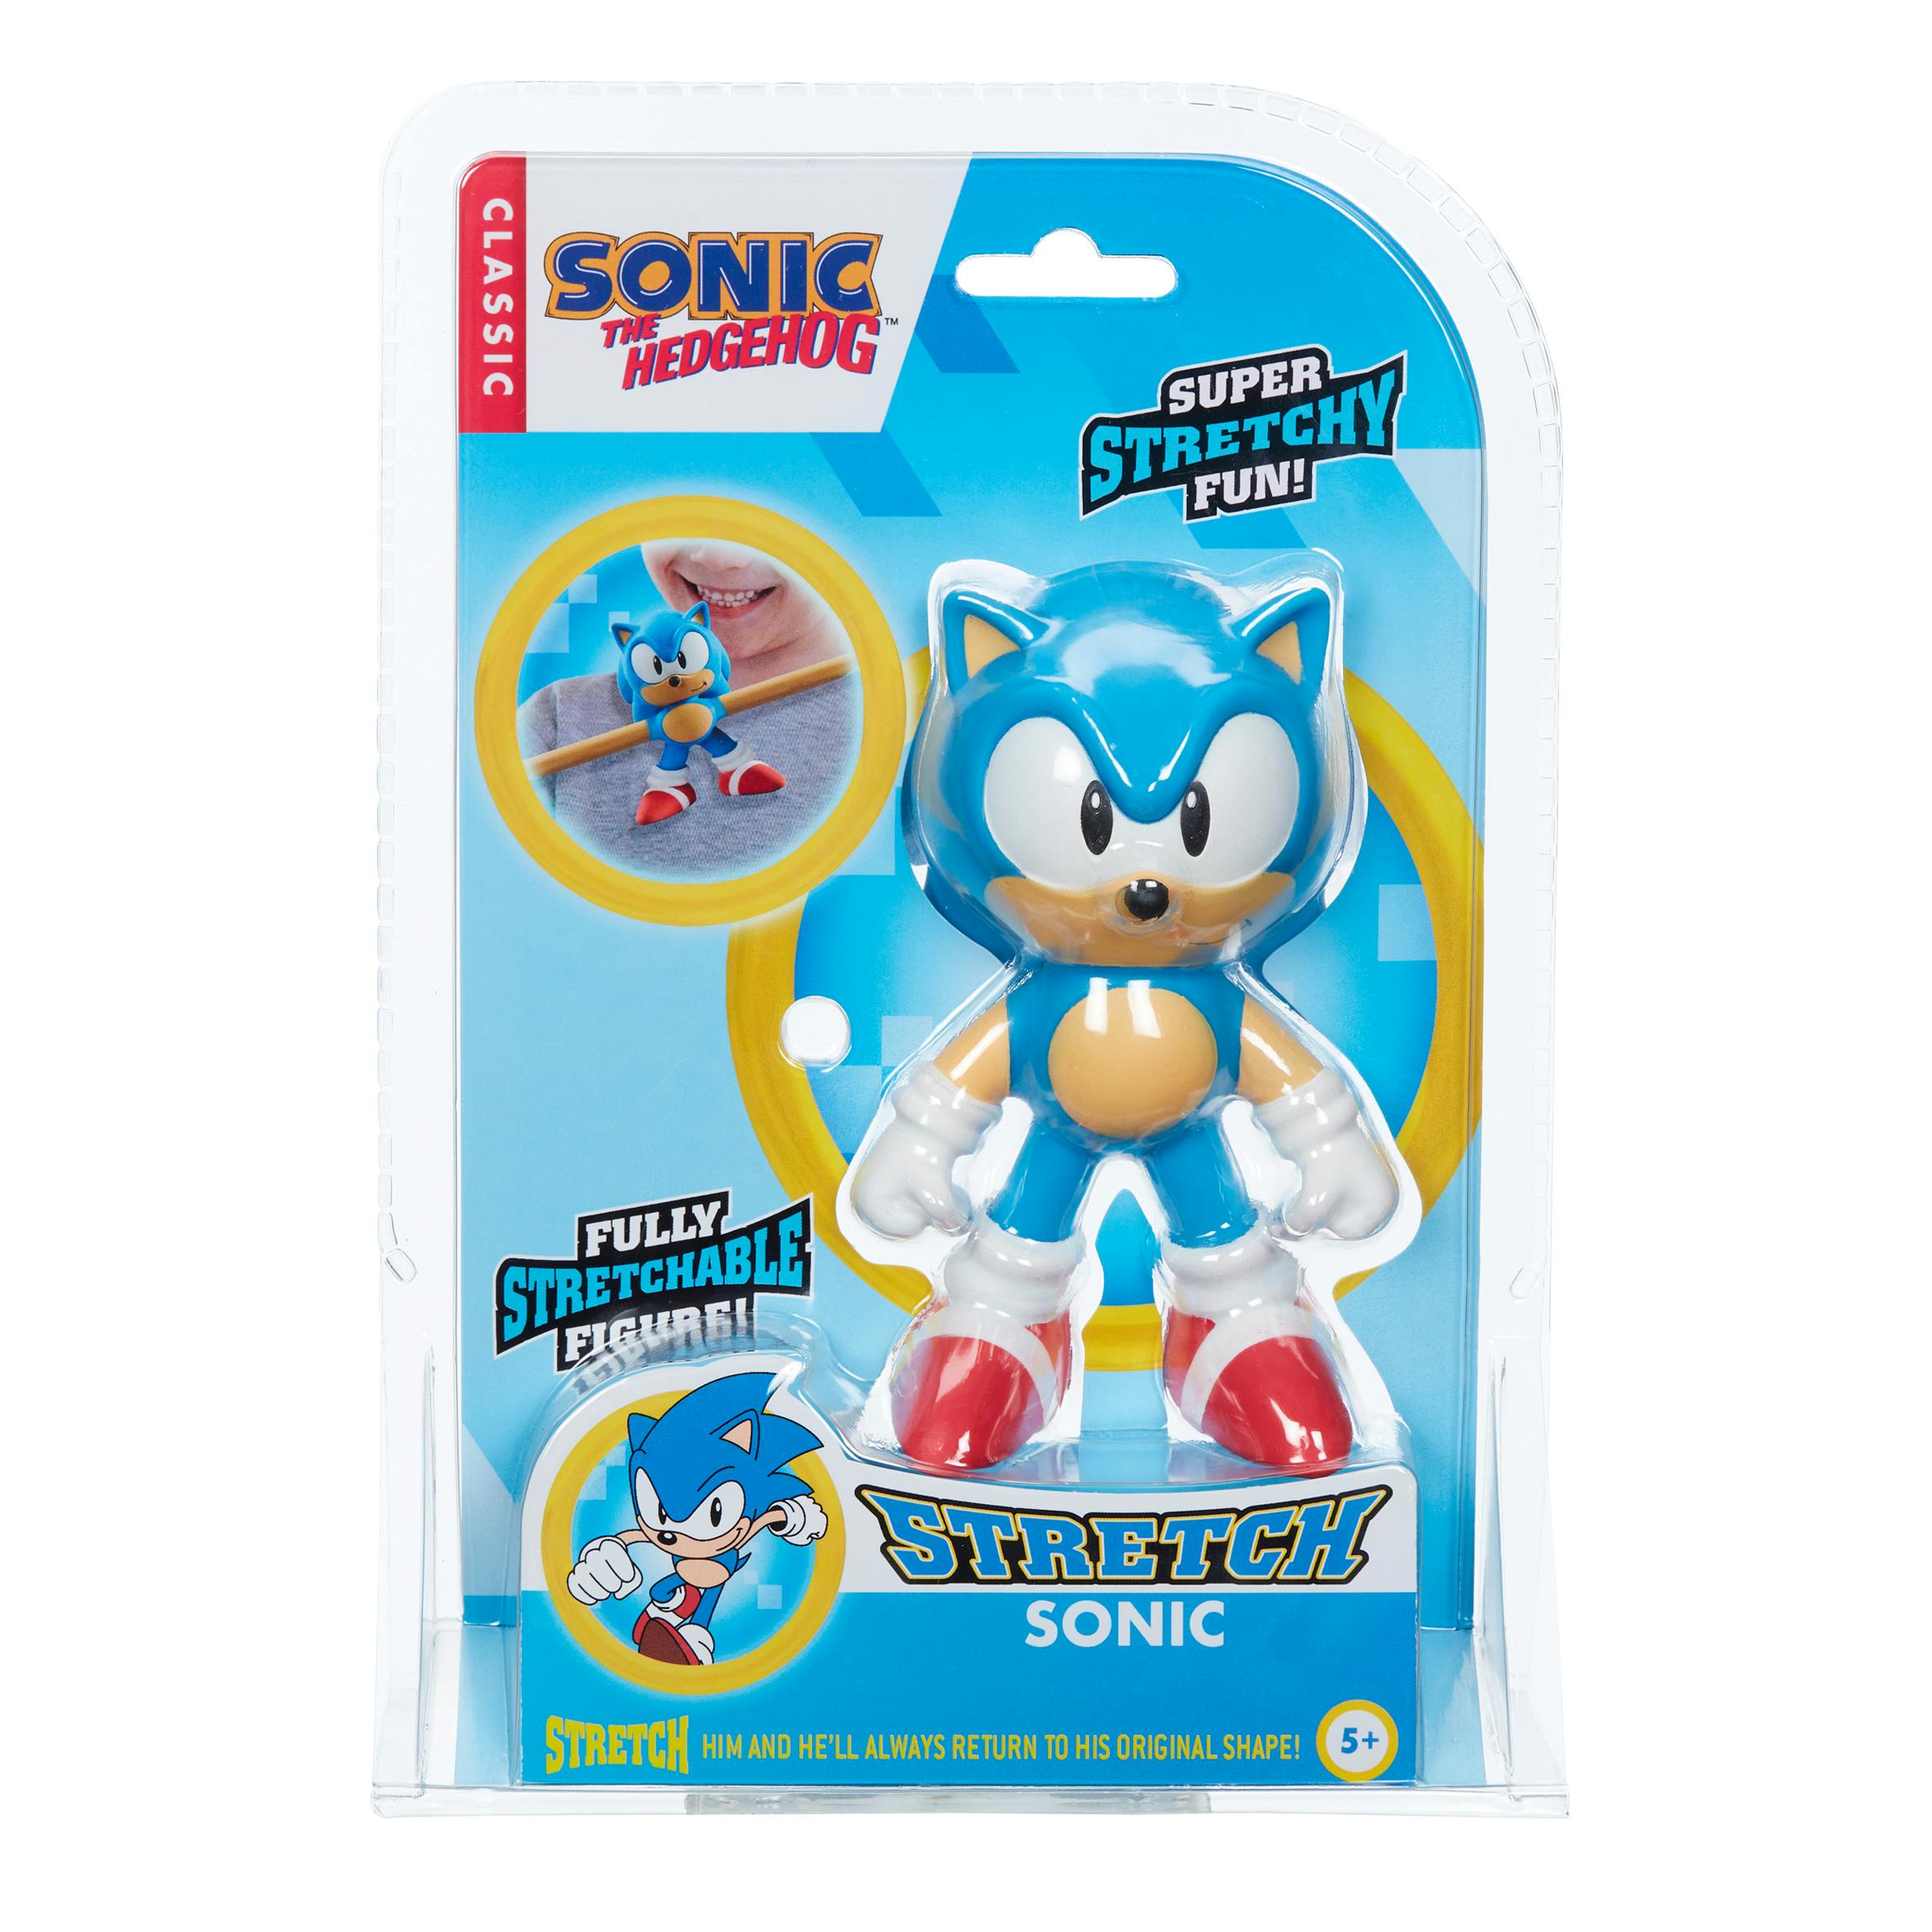 Mini Stretch Pop Sonic The Hedgehog